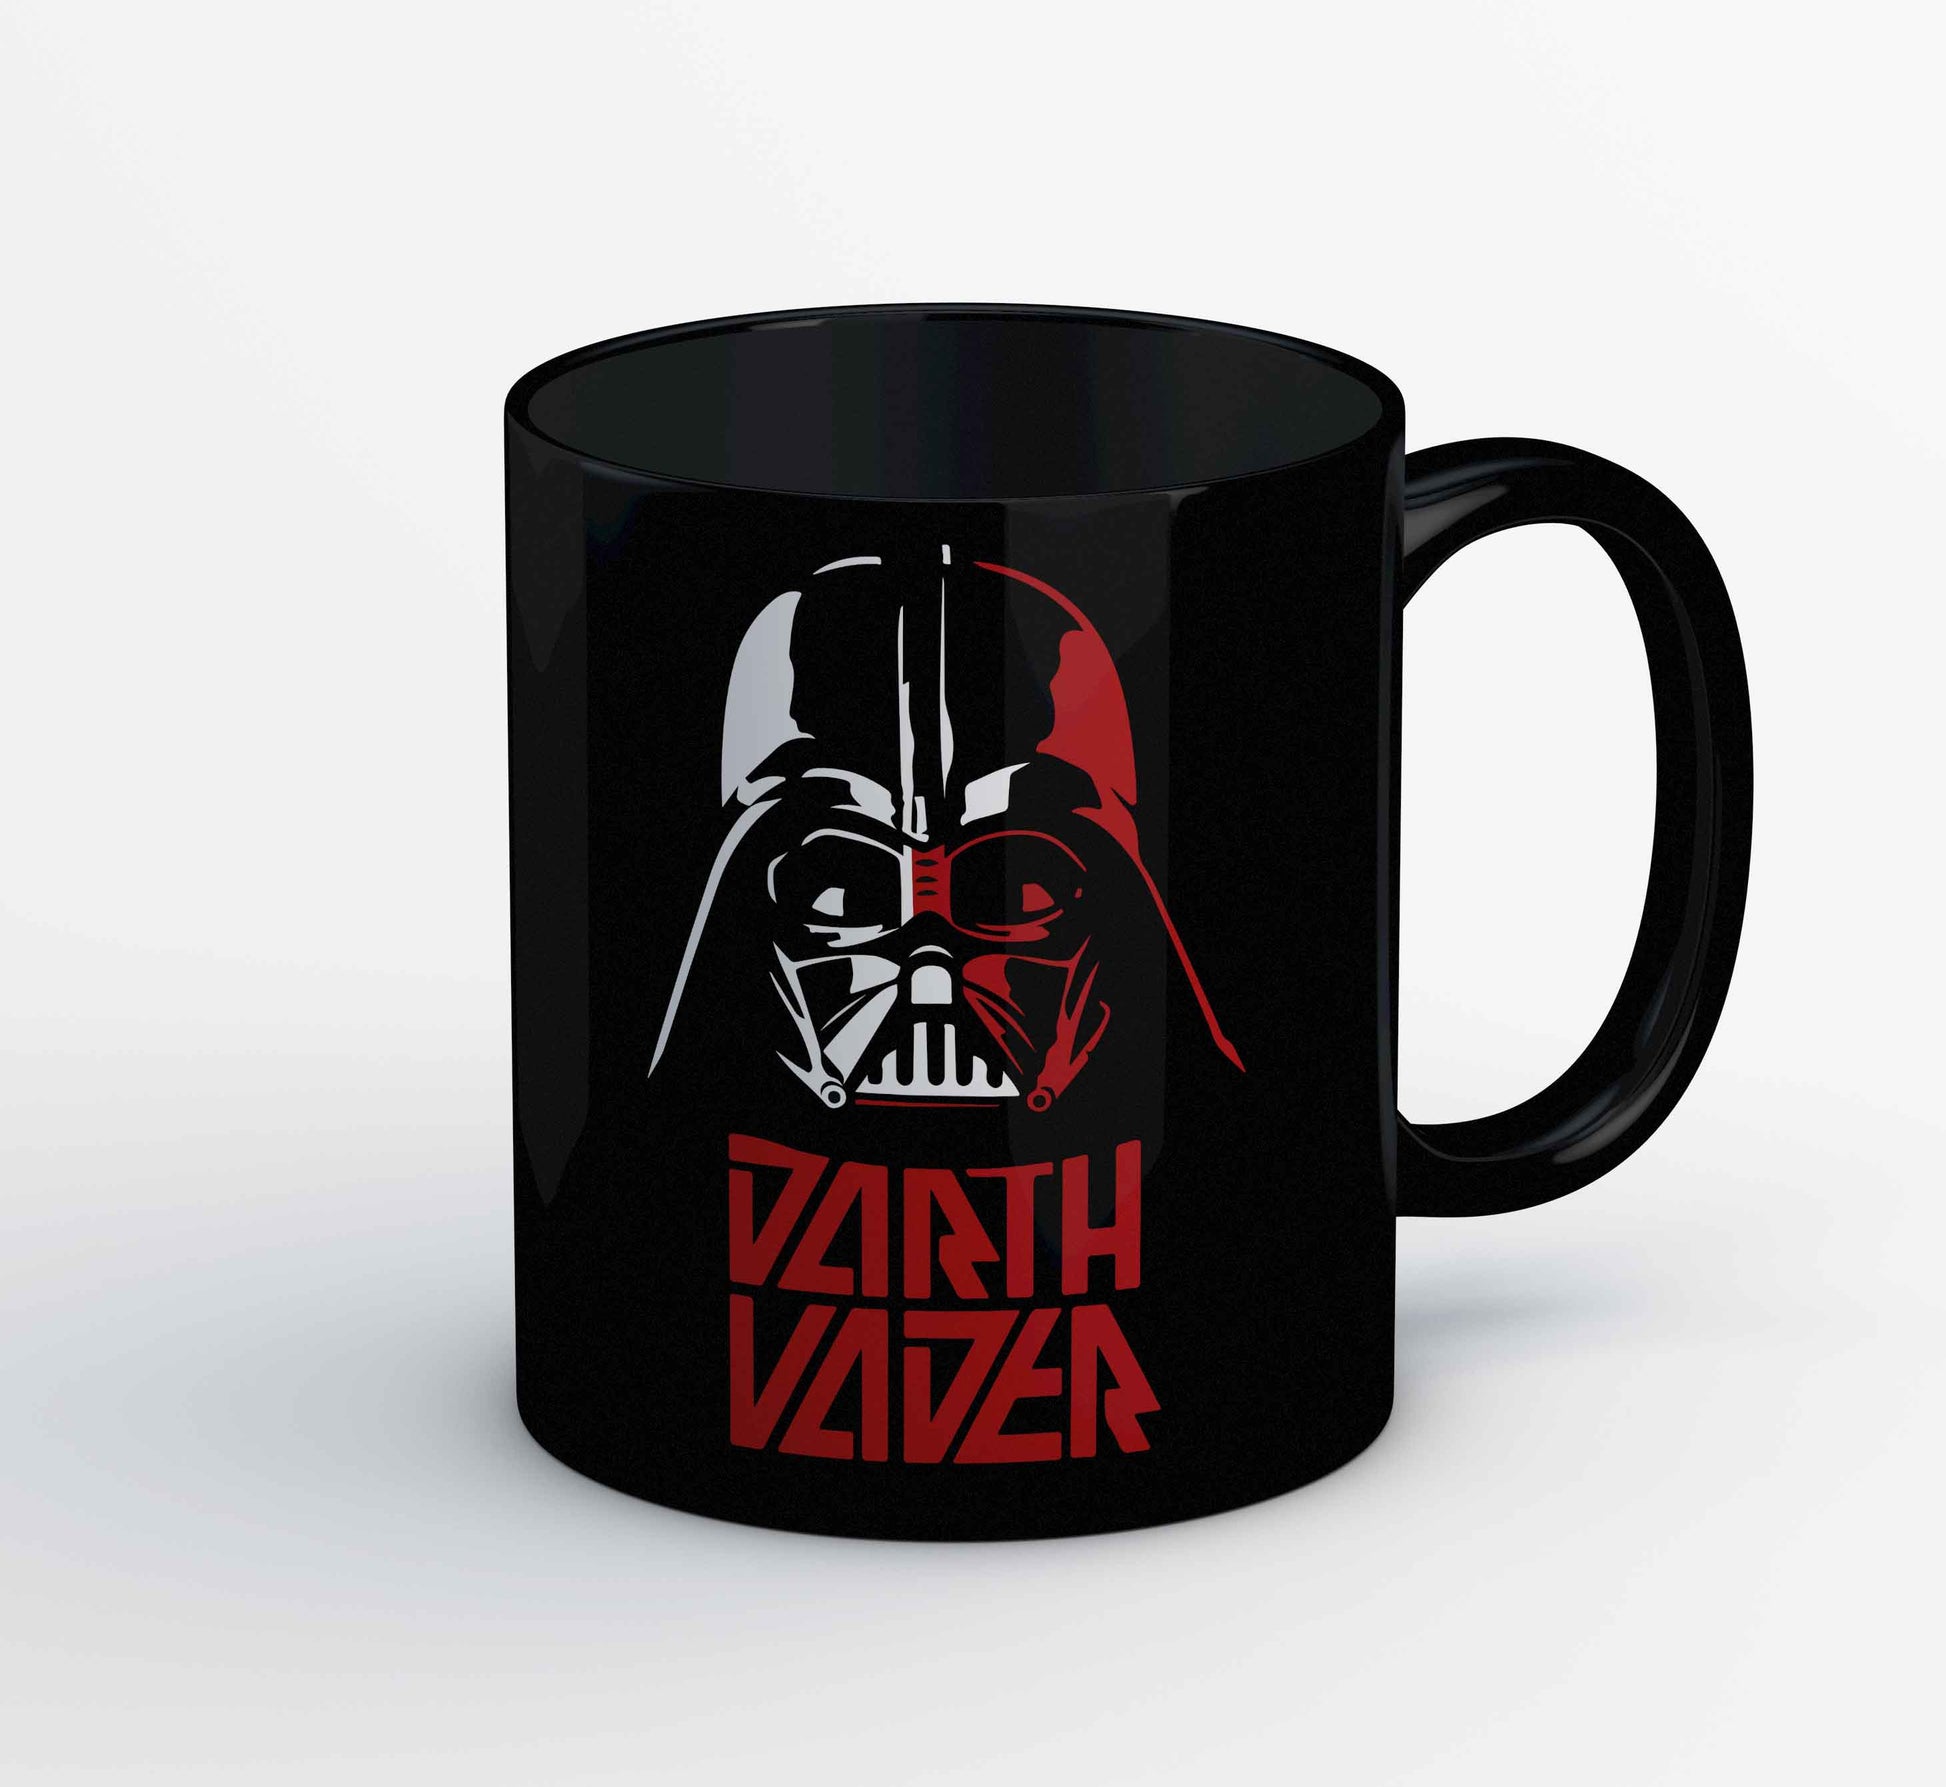 Taza Star Wars Coffee